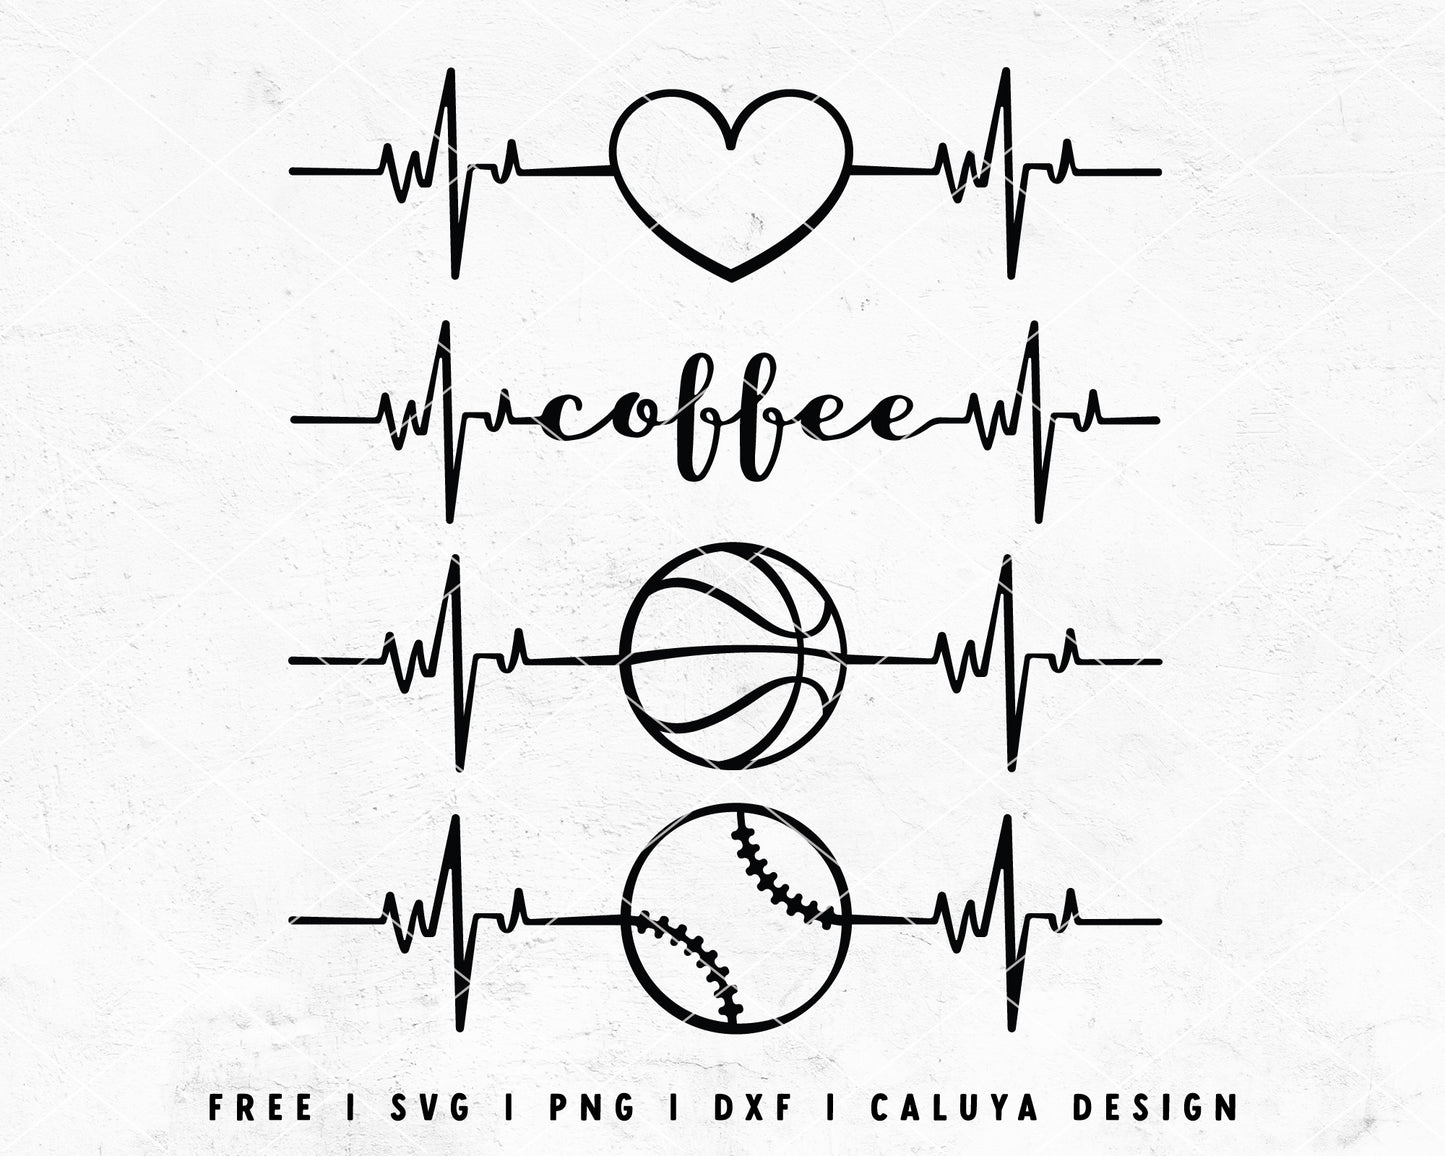 FREE Heart Beat SVG | Sport SVG  Cut File for Cricut, Cameo Silhouette | Free SVG Cut File